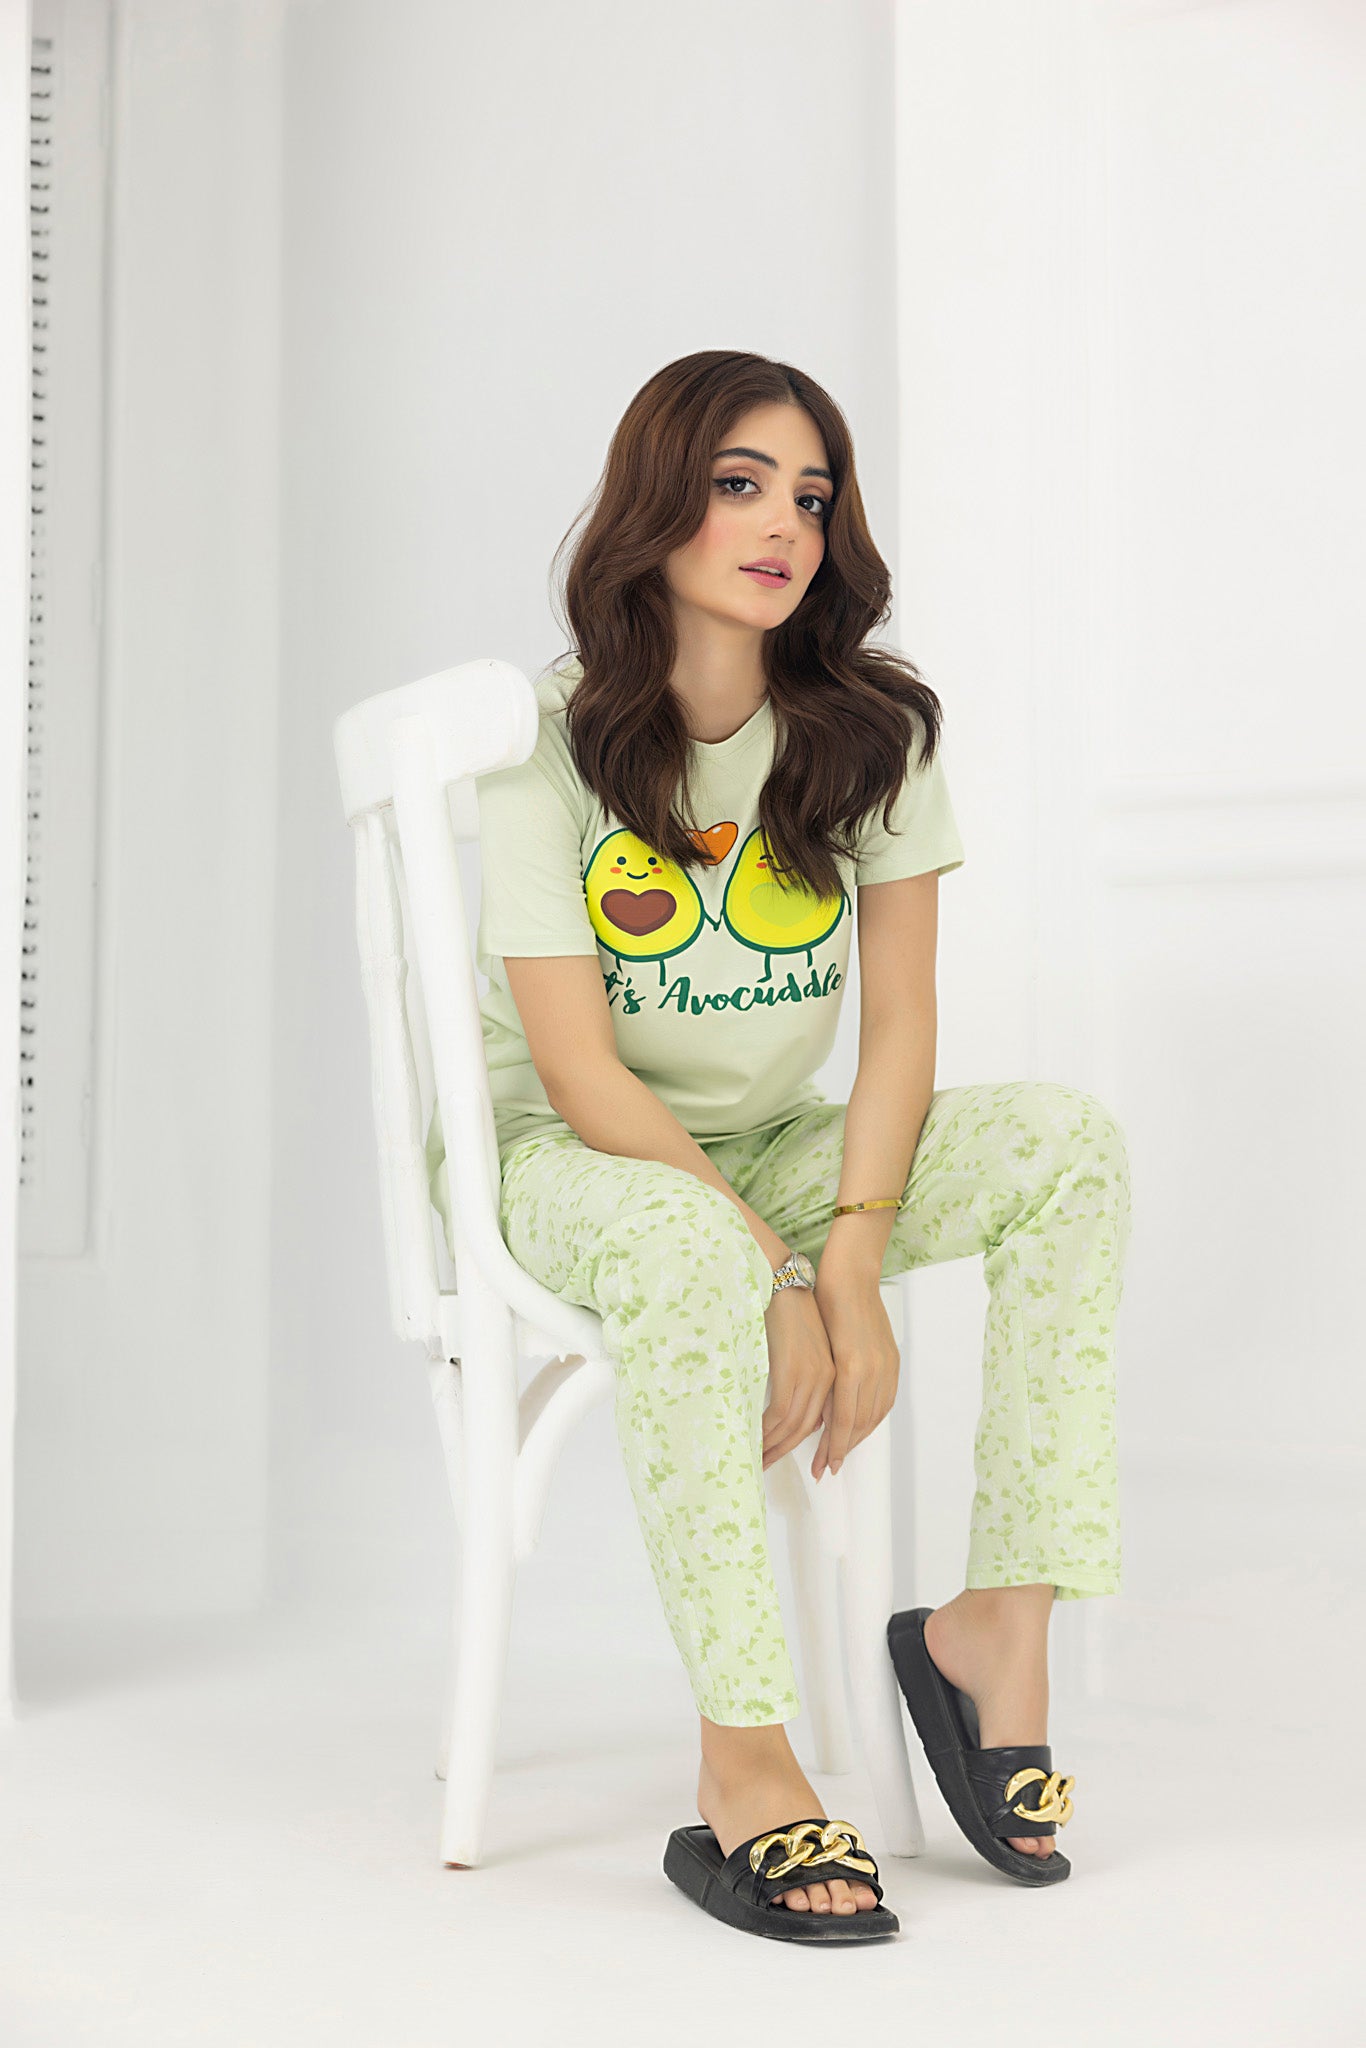 Avocuddle Jersey and Pyjama set (Green)